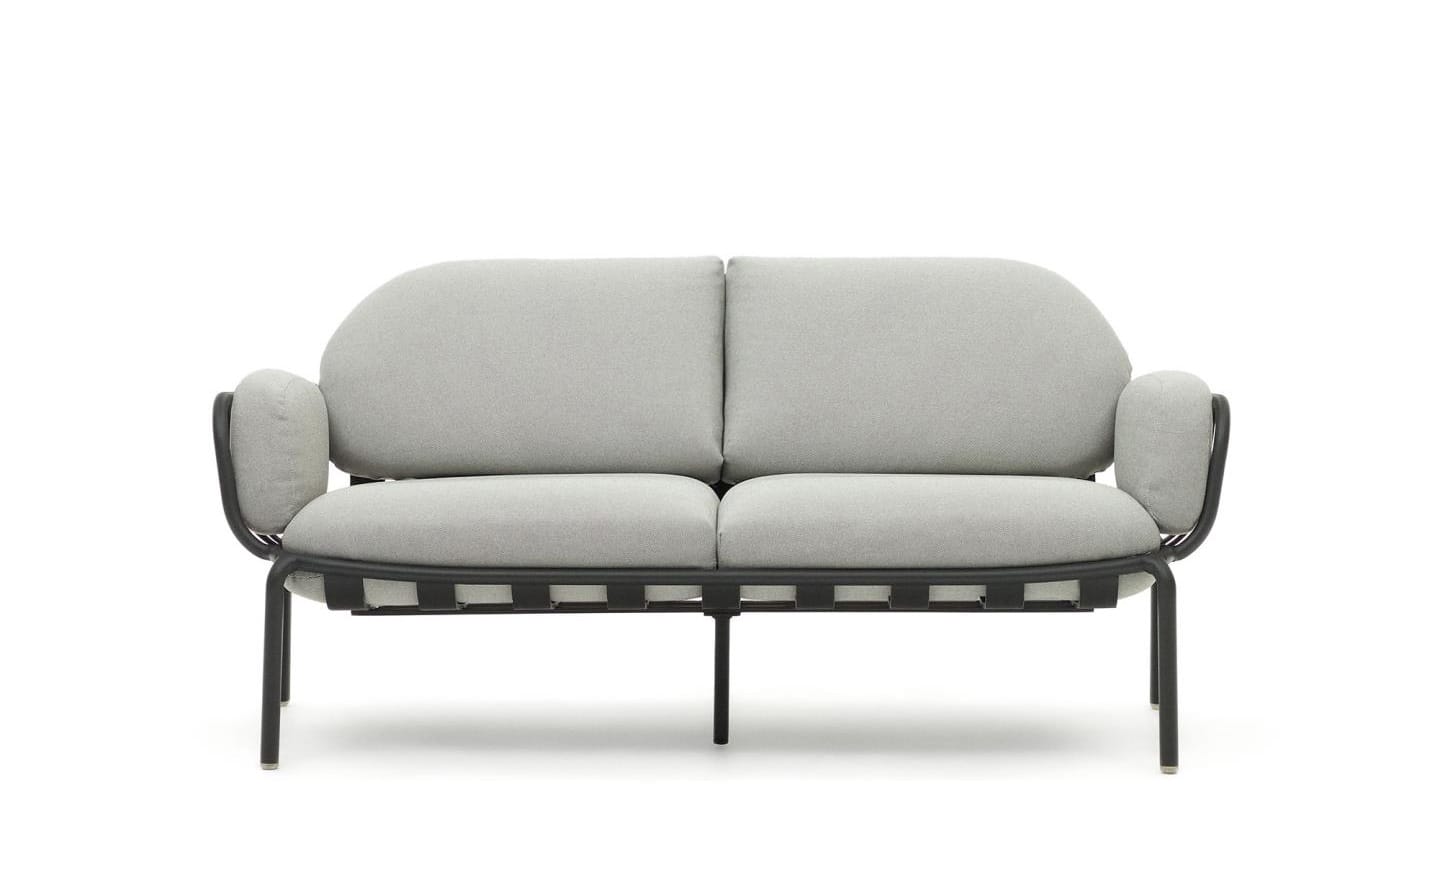 Sofá de Exterior de 2 Lugares Joncols Cinza, estrutura em alumínio curvado, almofadas removíveis, resistente ao uso exterior